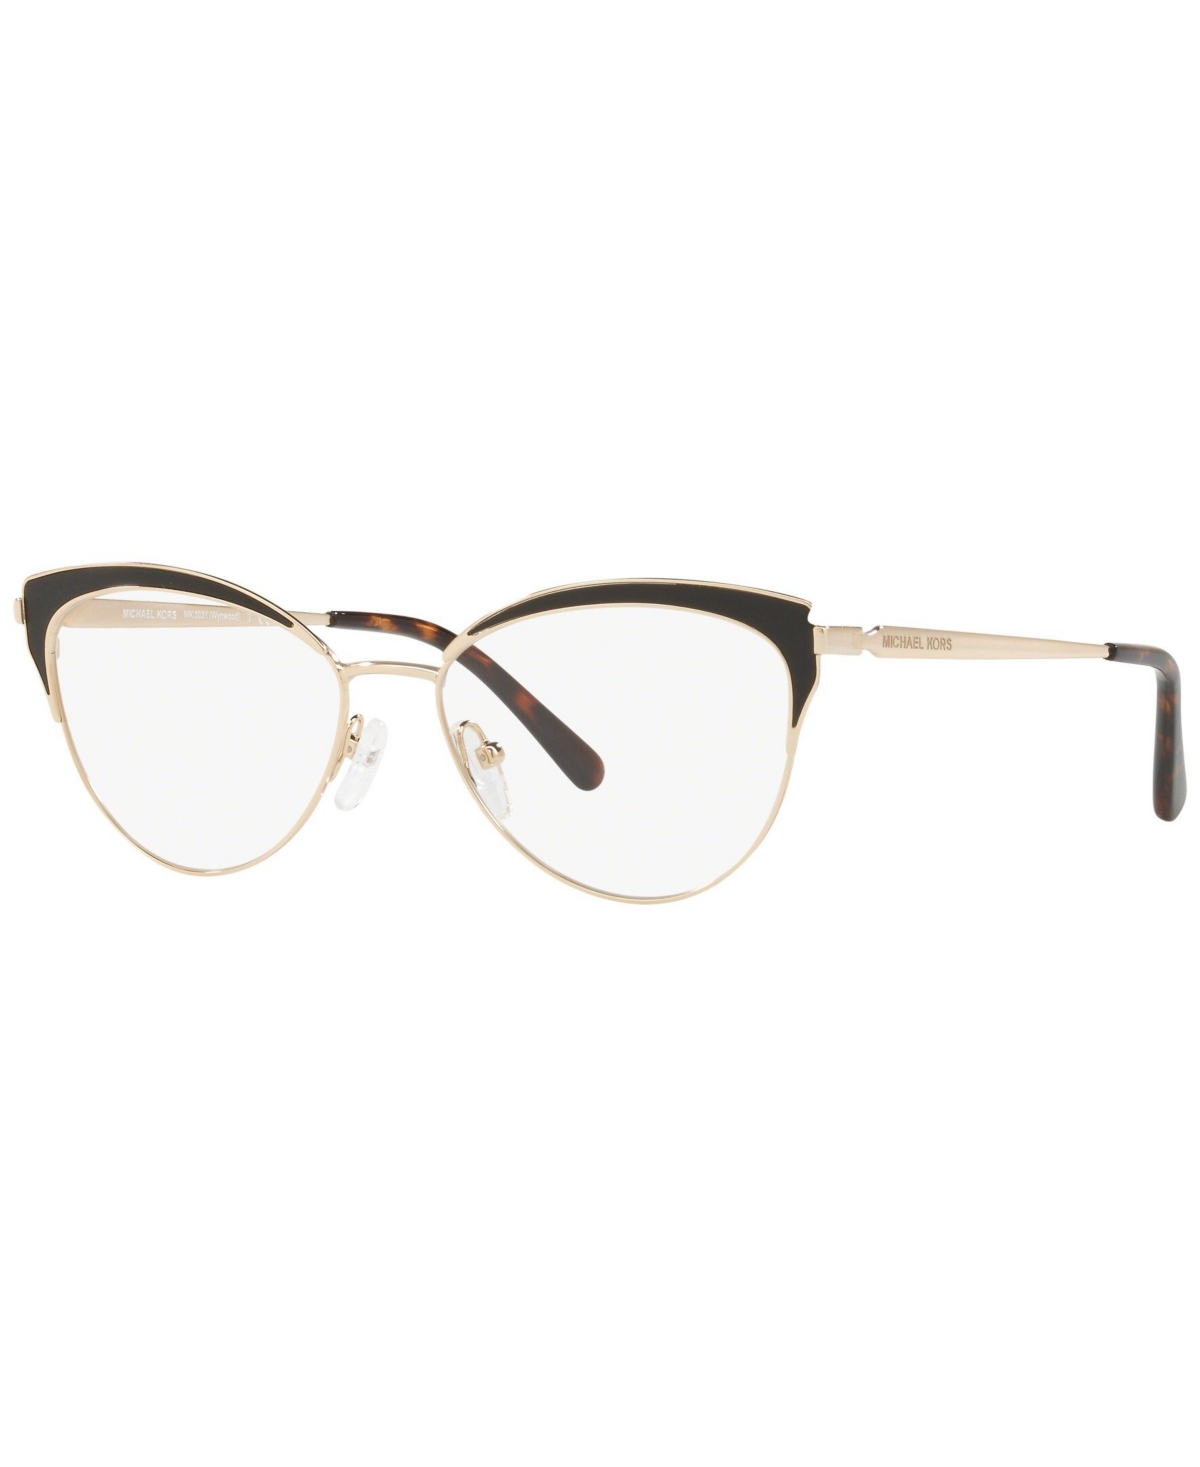 MK3031 Women's Cat Eye Eyeglasses - Gold-Tone